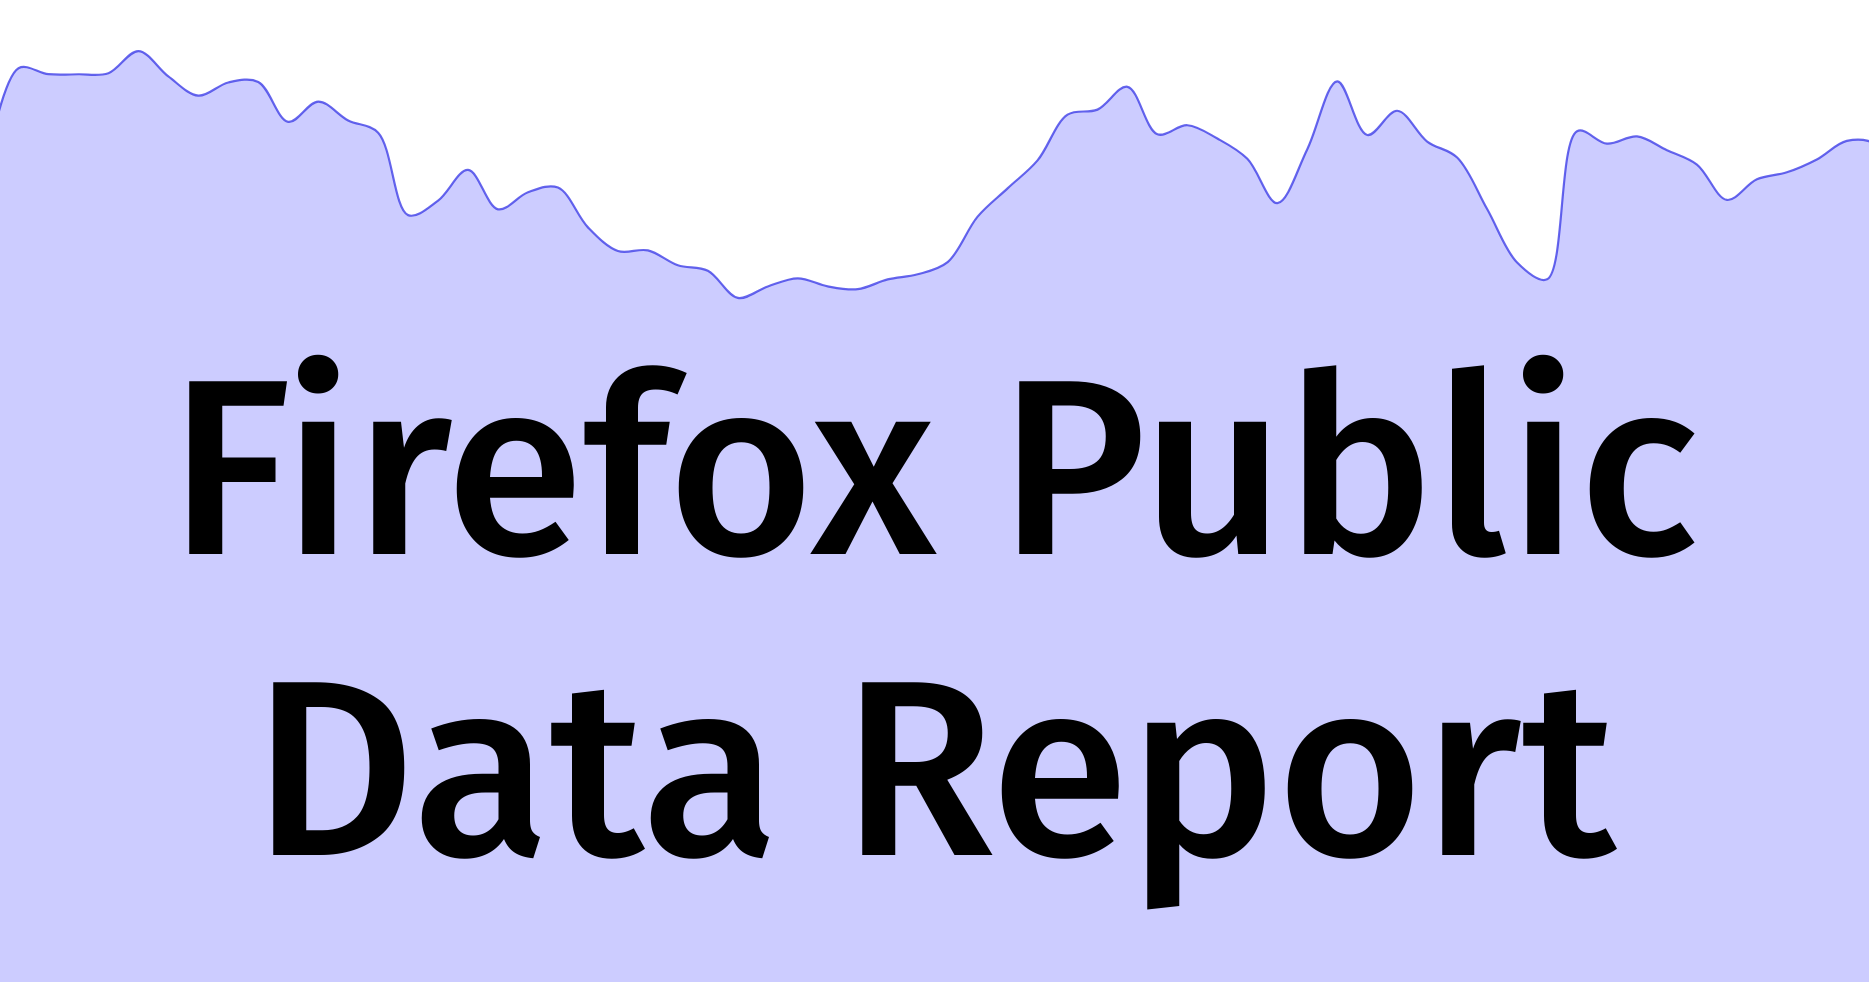 data.firefox.com image